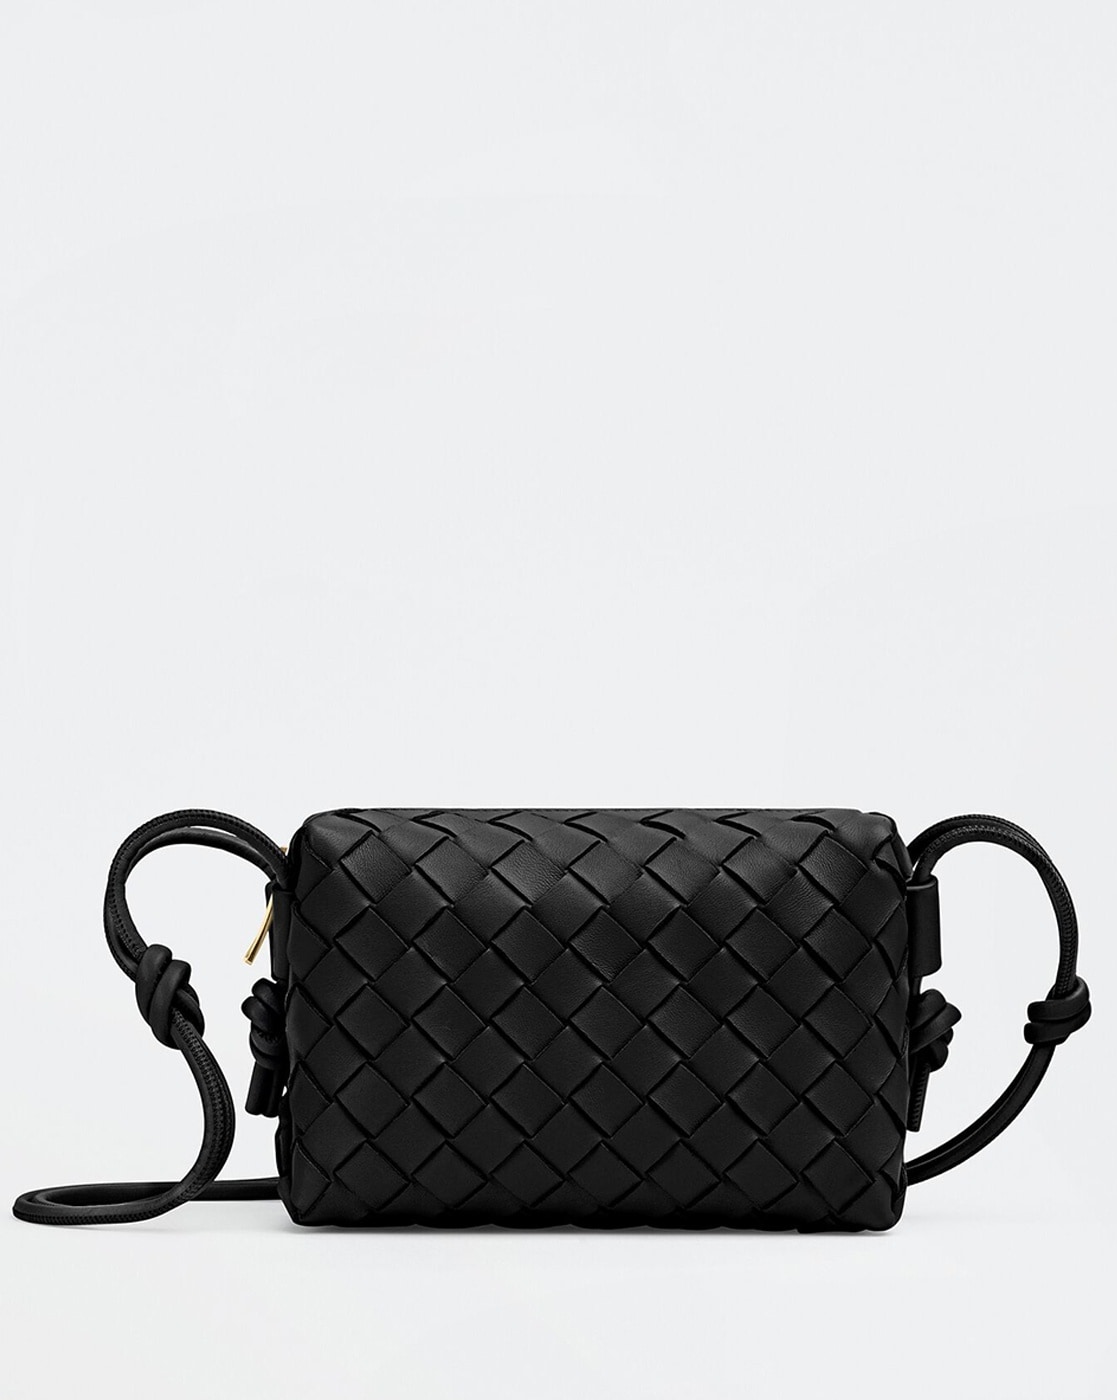 NEW Bottega Veneta Intrecciato Leather Zip Around Crossbody Bag Messenger  BLACK  Inox Wind